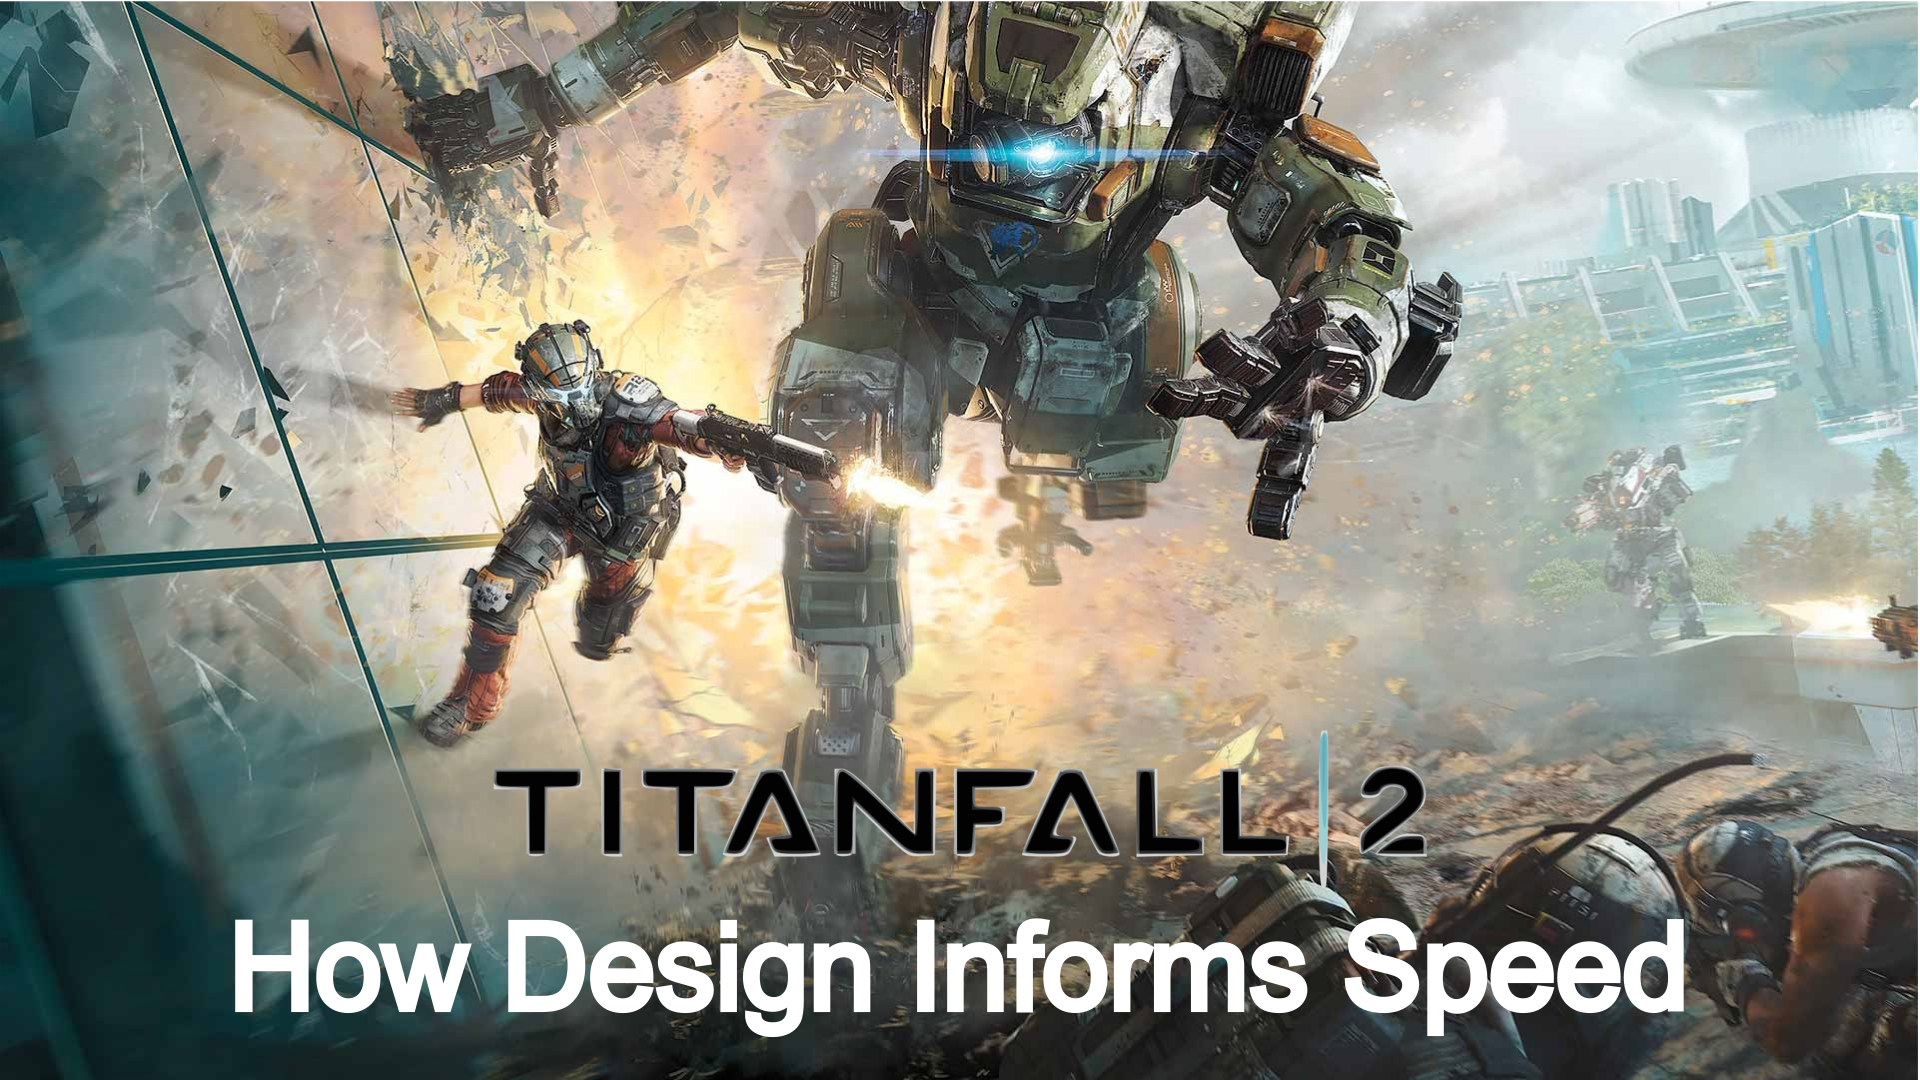 Titanfall 2: How Design Informs Speed, by Abhishek Iyer